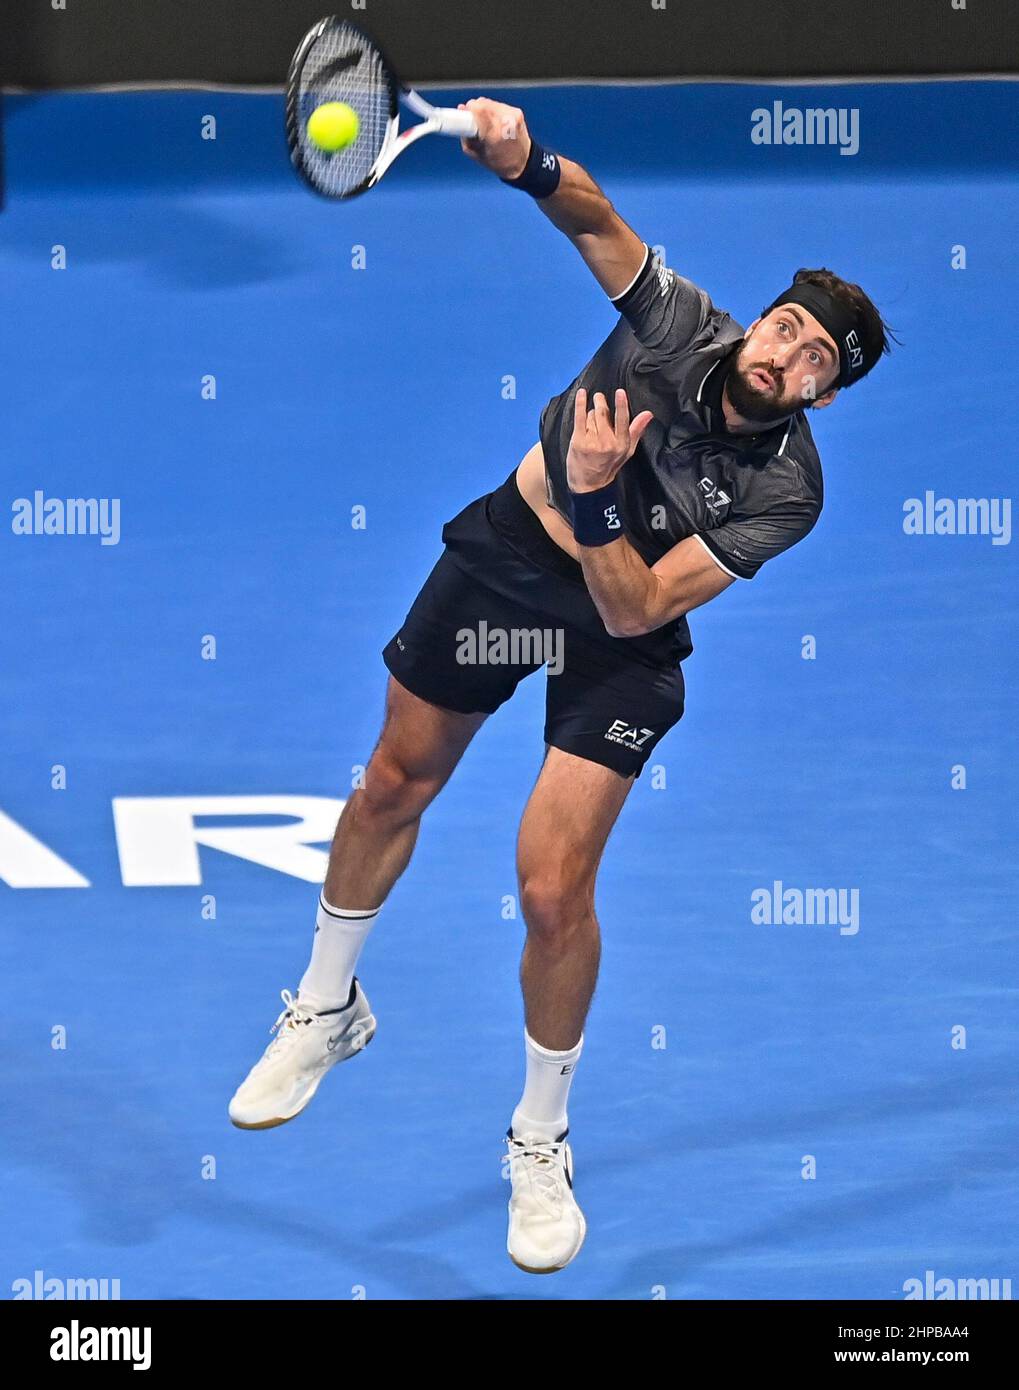 Doha. 19th Feb, 2022. Nikoloz Basilashvili of Georgia serves during the ATP  Qatar Open tennis tournament